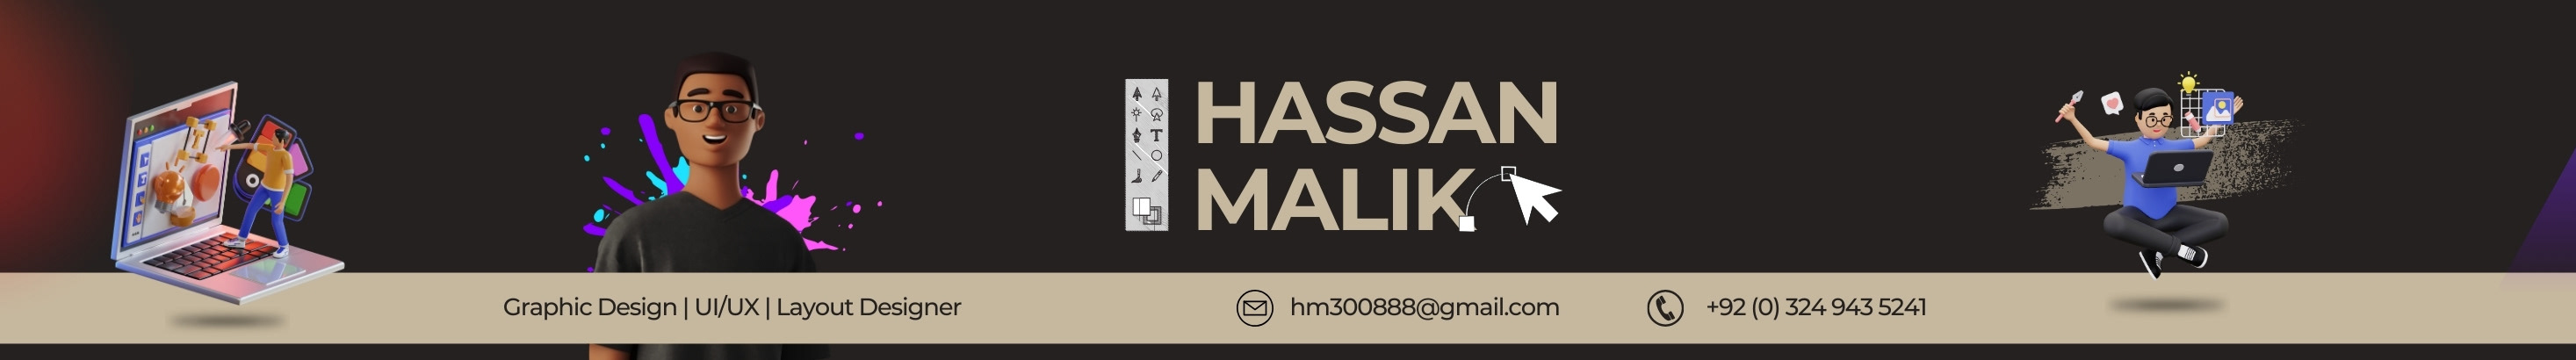 Hassan Malik's profile banner